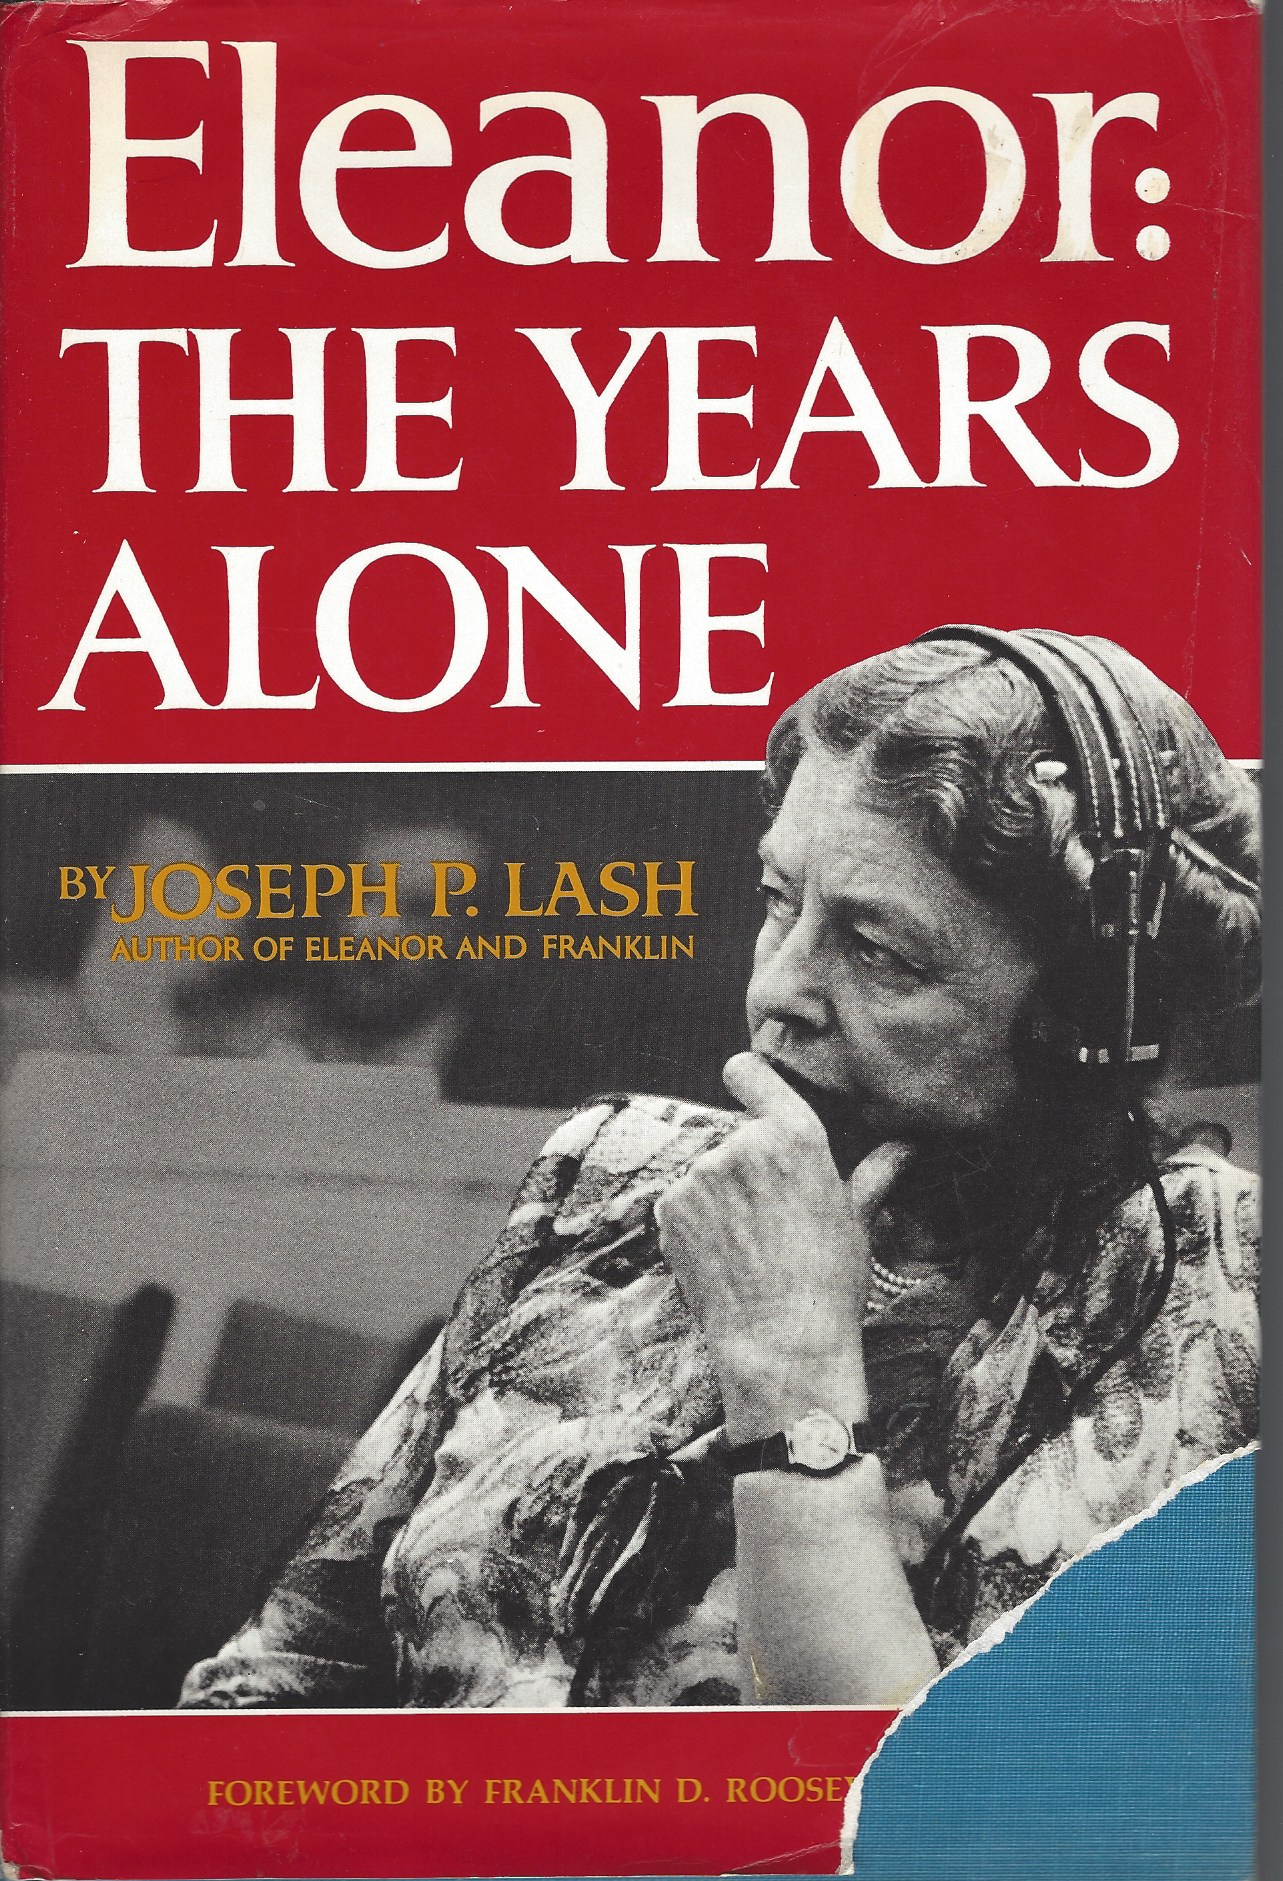 LASH JOSEPH P. - Eleanor: The Years Alone